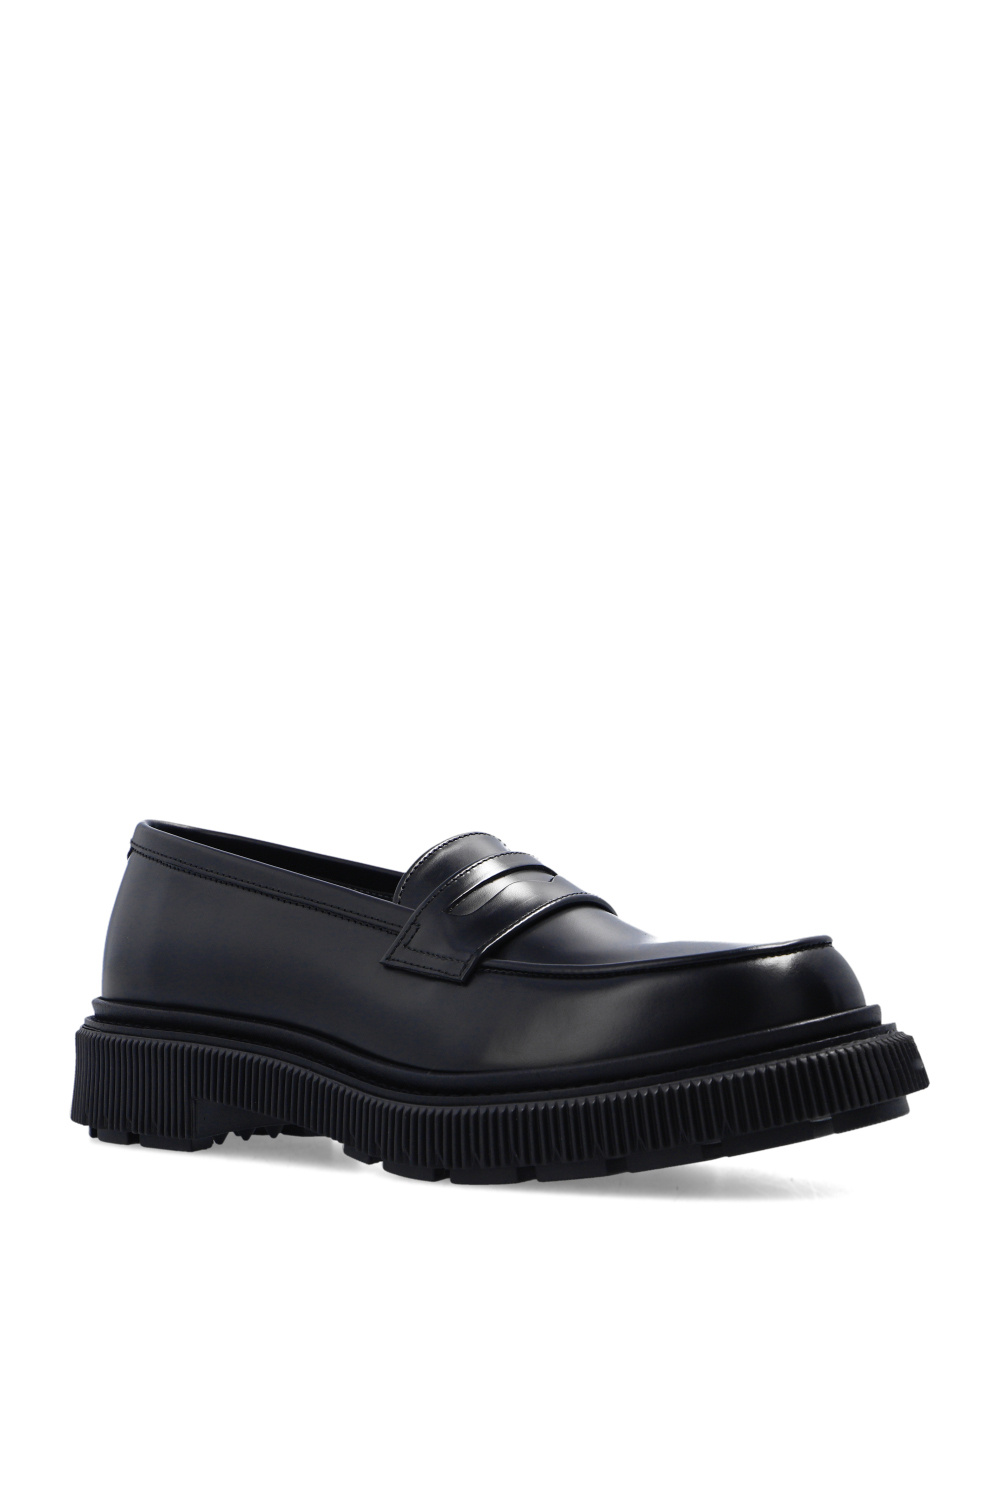 Adieu Paris ‘Type 159’ loafers | Women's Shoes | Vitkac